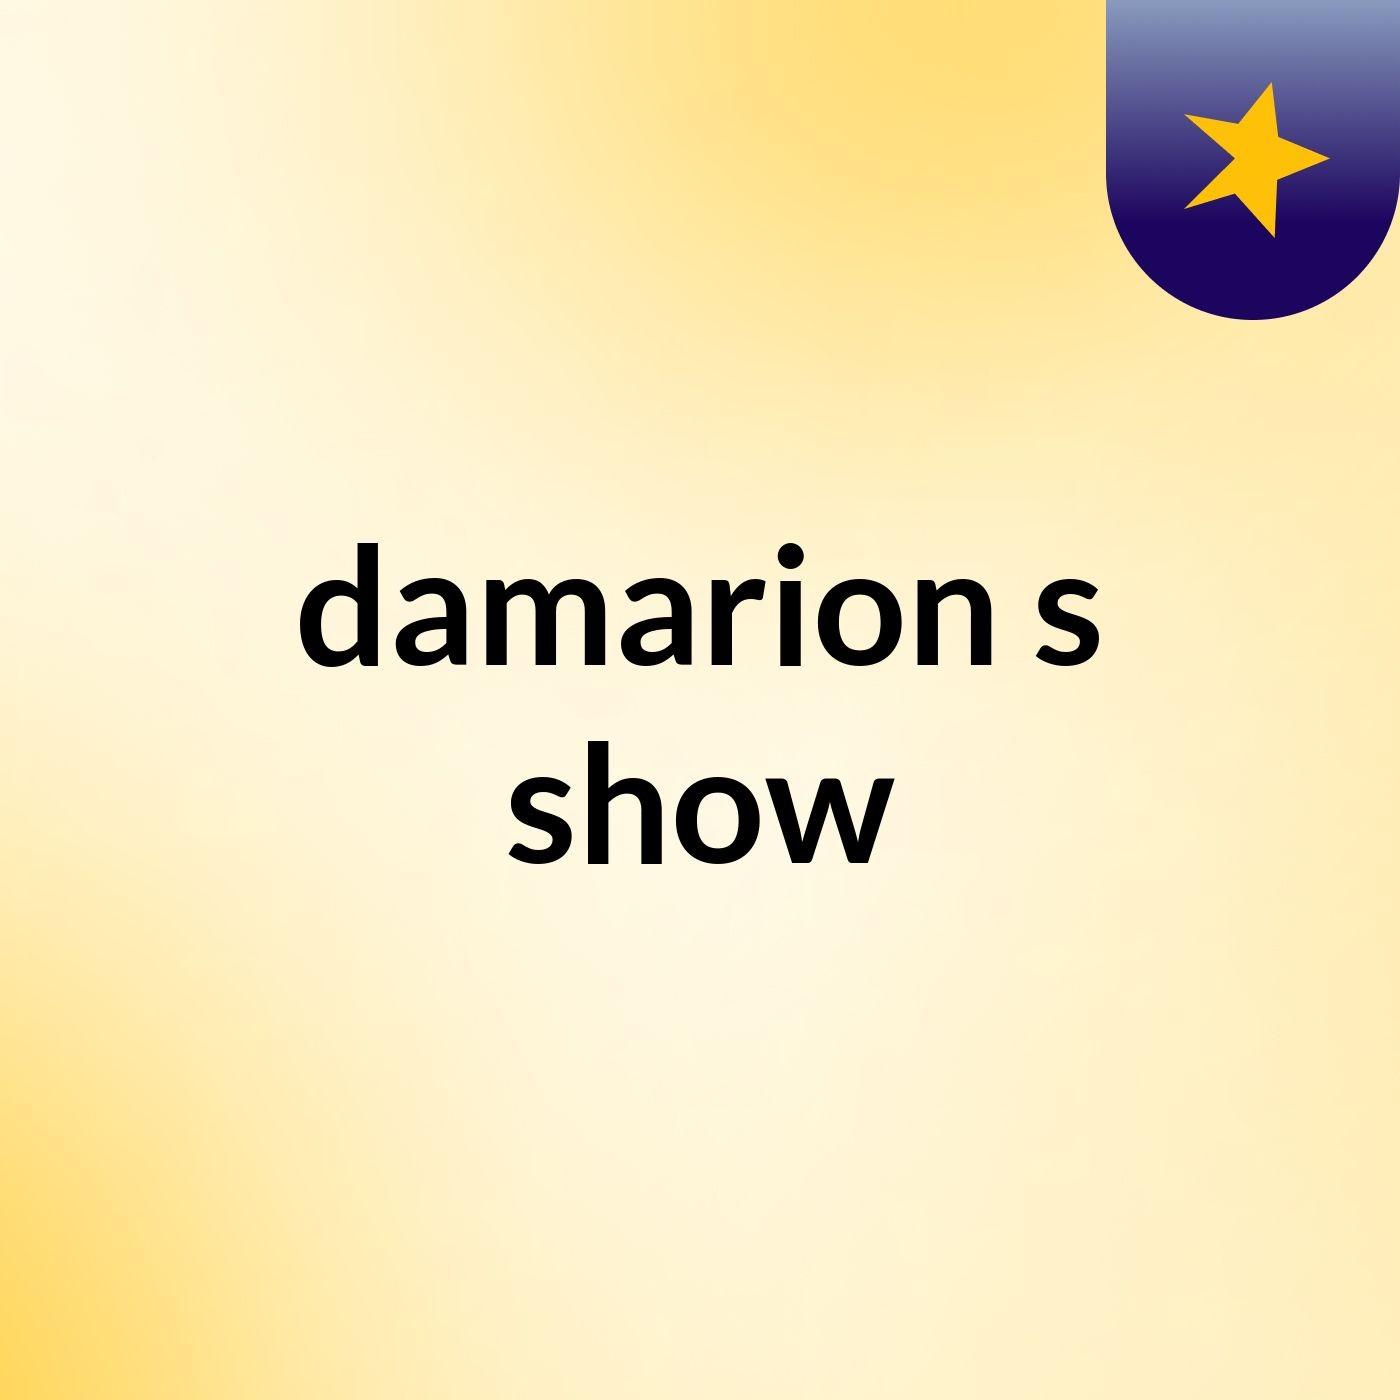 damarion's show